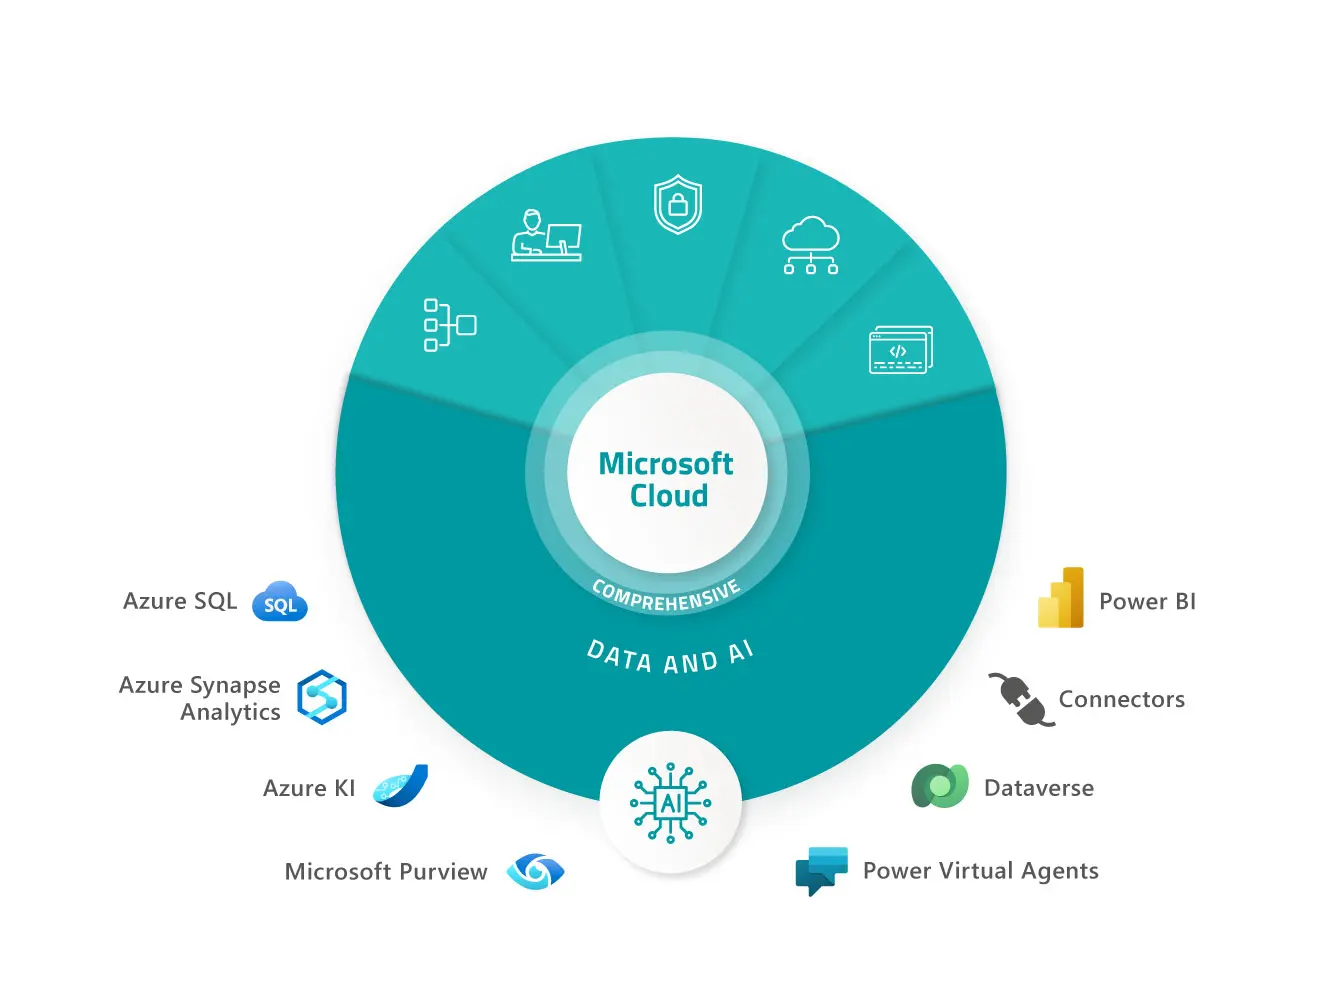 Data & AI component of Microsoft Cloud, including Azure SQL, Azure Synapse Analytics, Azure AI, Microsoft Purview, Power BI, Connectors, Dataverse & Power Virtual Agents.